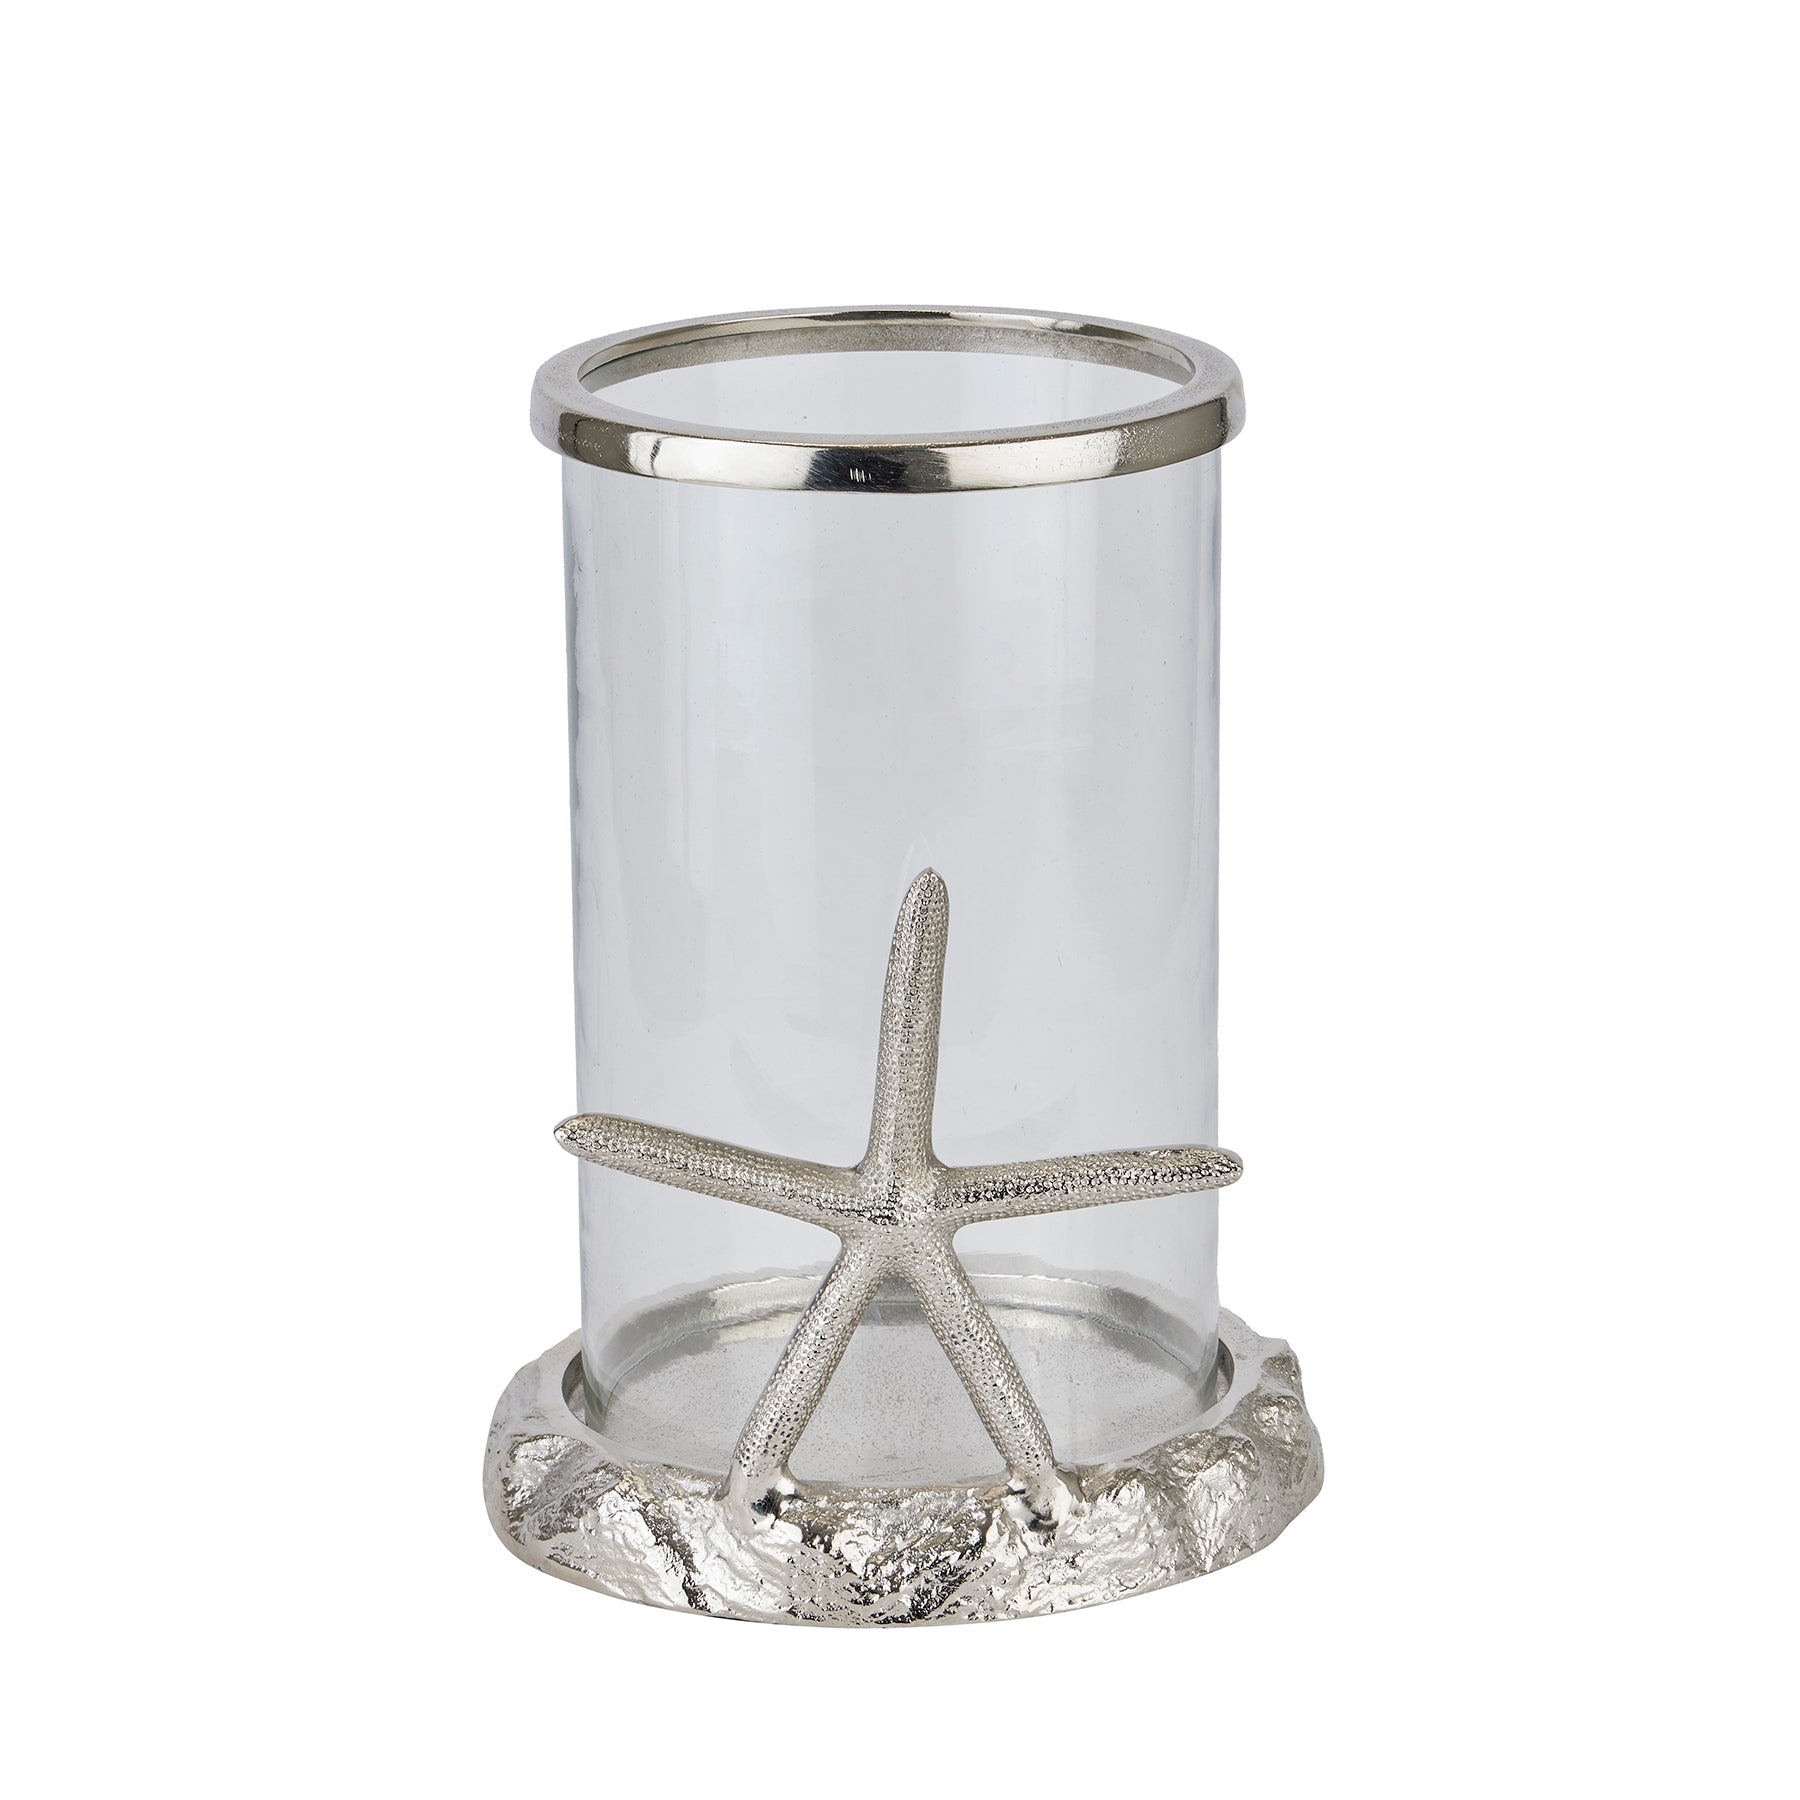 View Silver Starfish Candle Hurricane Lantern information